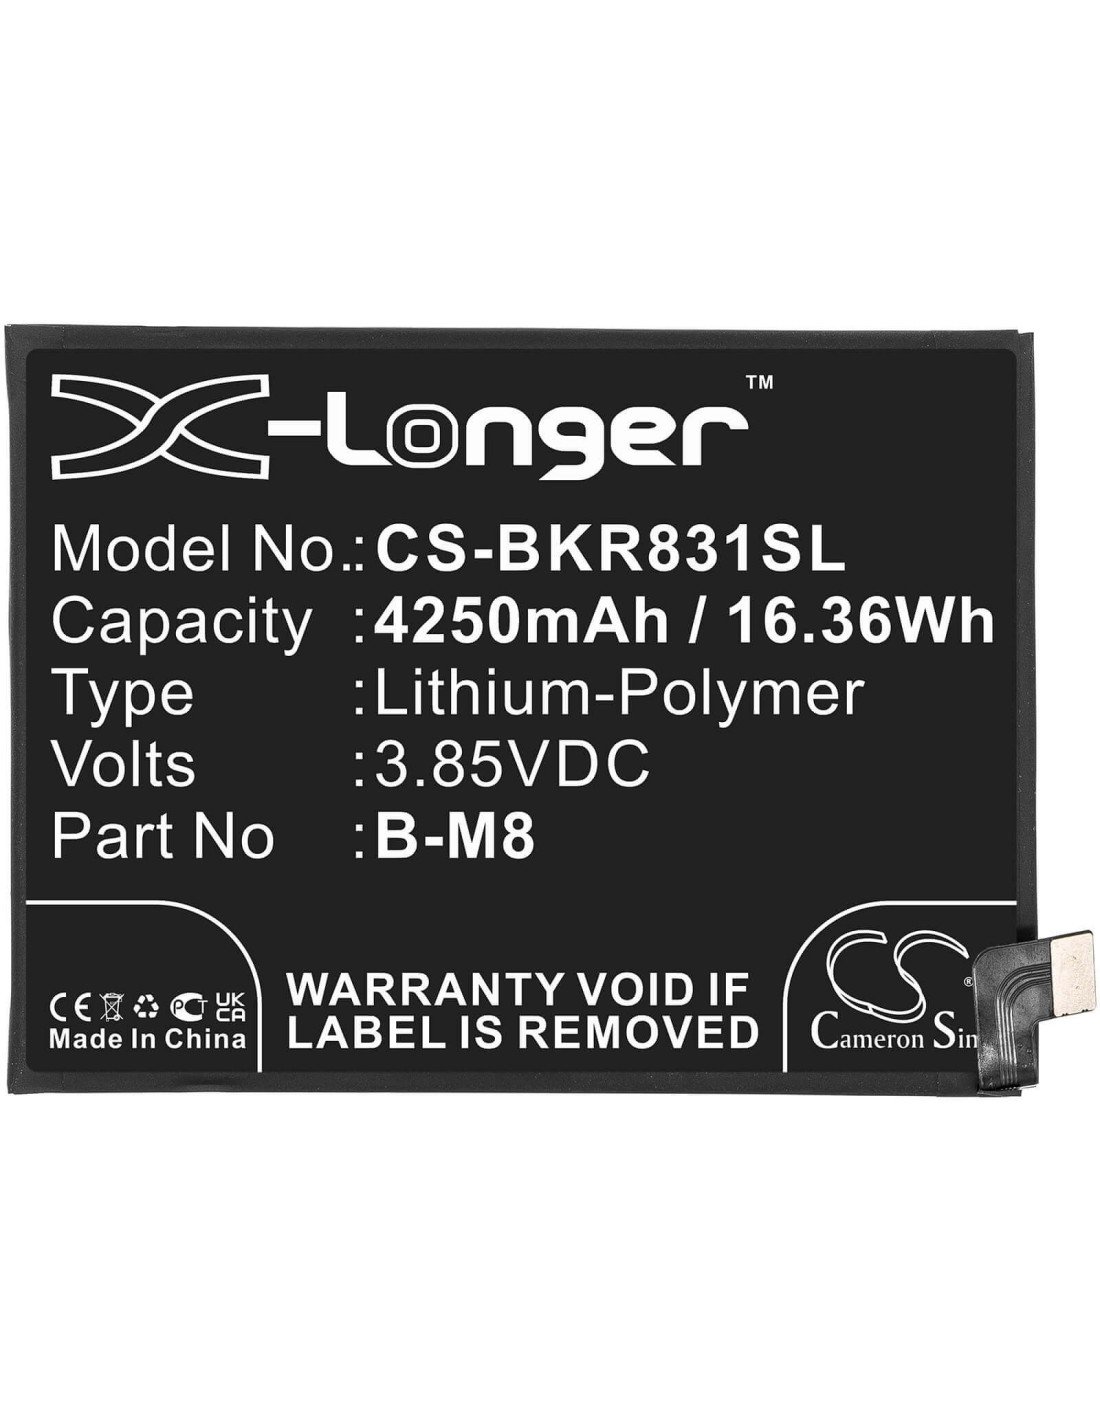 3.85V, Li-Polymer, 4250mAh, Battery fits Vivo, Neo 3, R831k, 16.36Wh